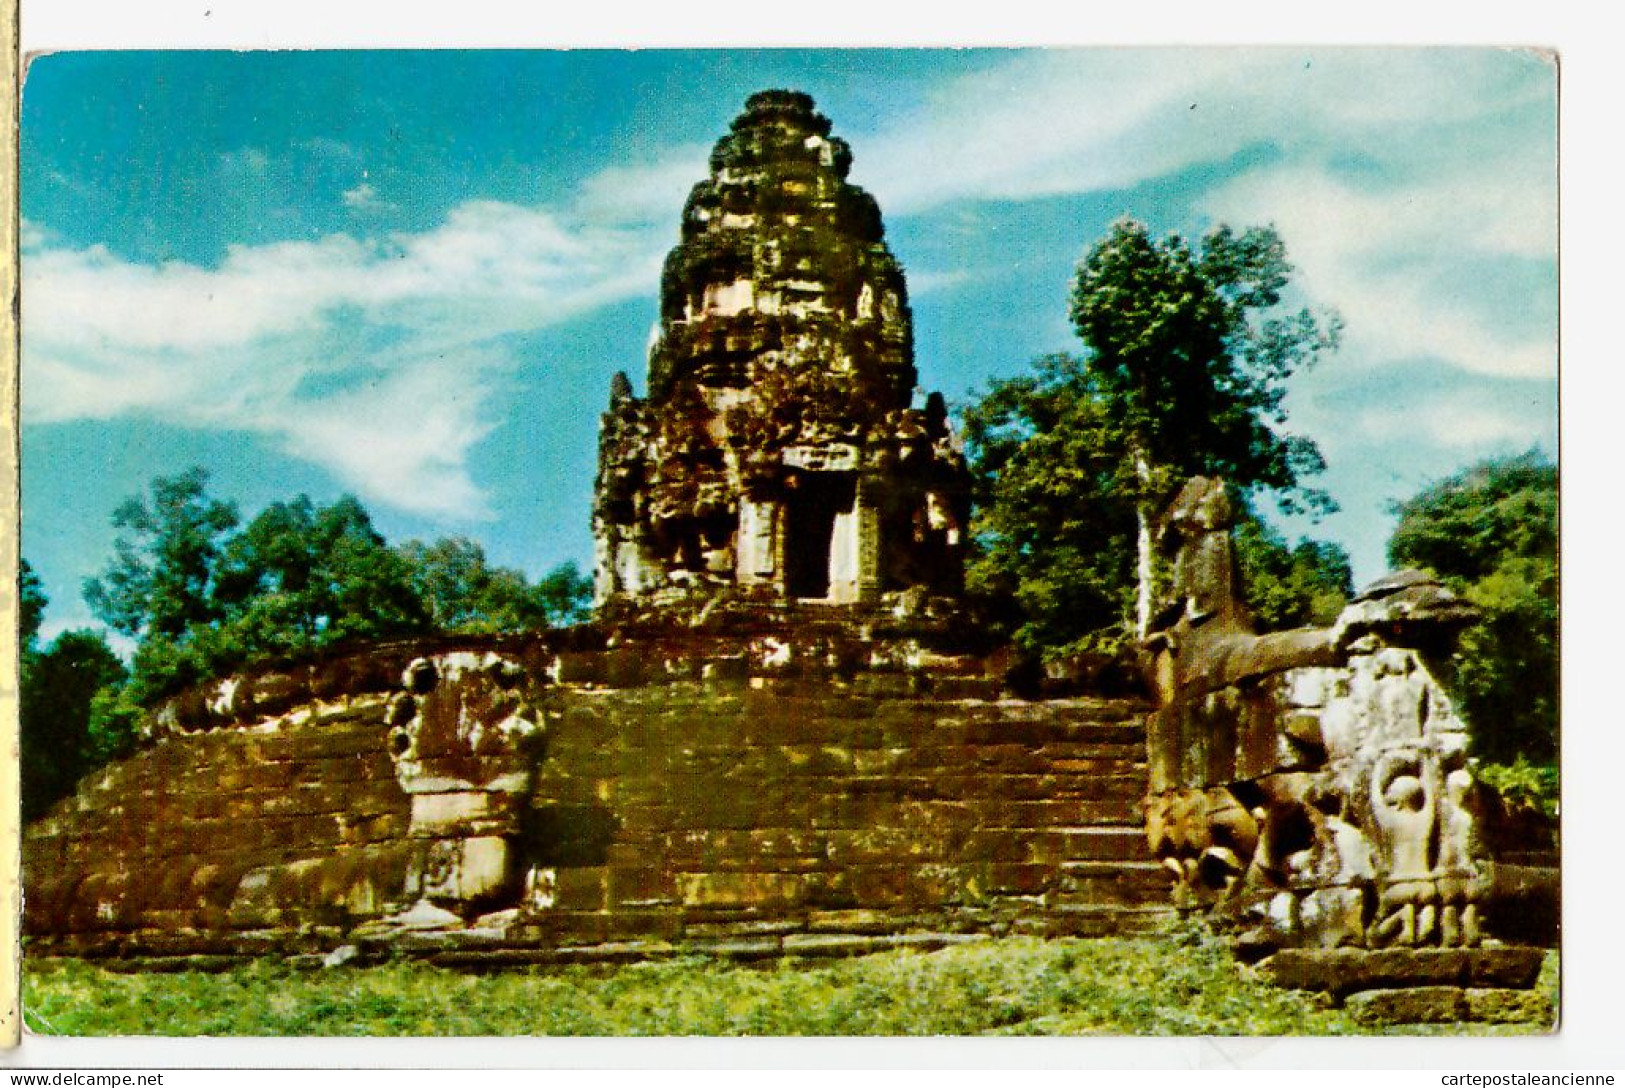 01058 ● Cambodge NEAK PEAN ANGKOR WAT CAMBODJA 1940s De SIN-KEN Chez PHA VA Kampong Chan -Hotel International PNOMPENH - Cambodia